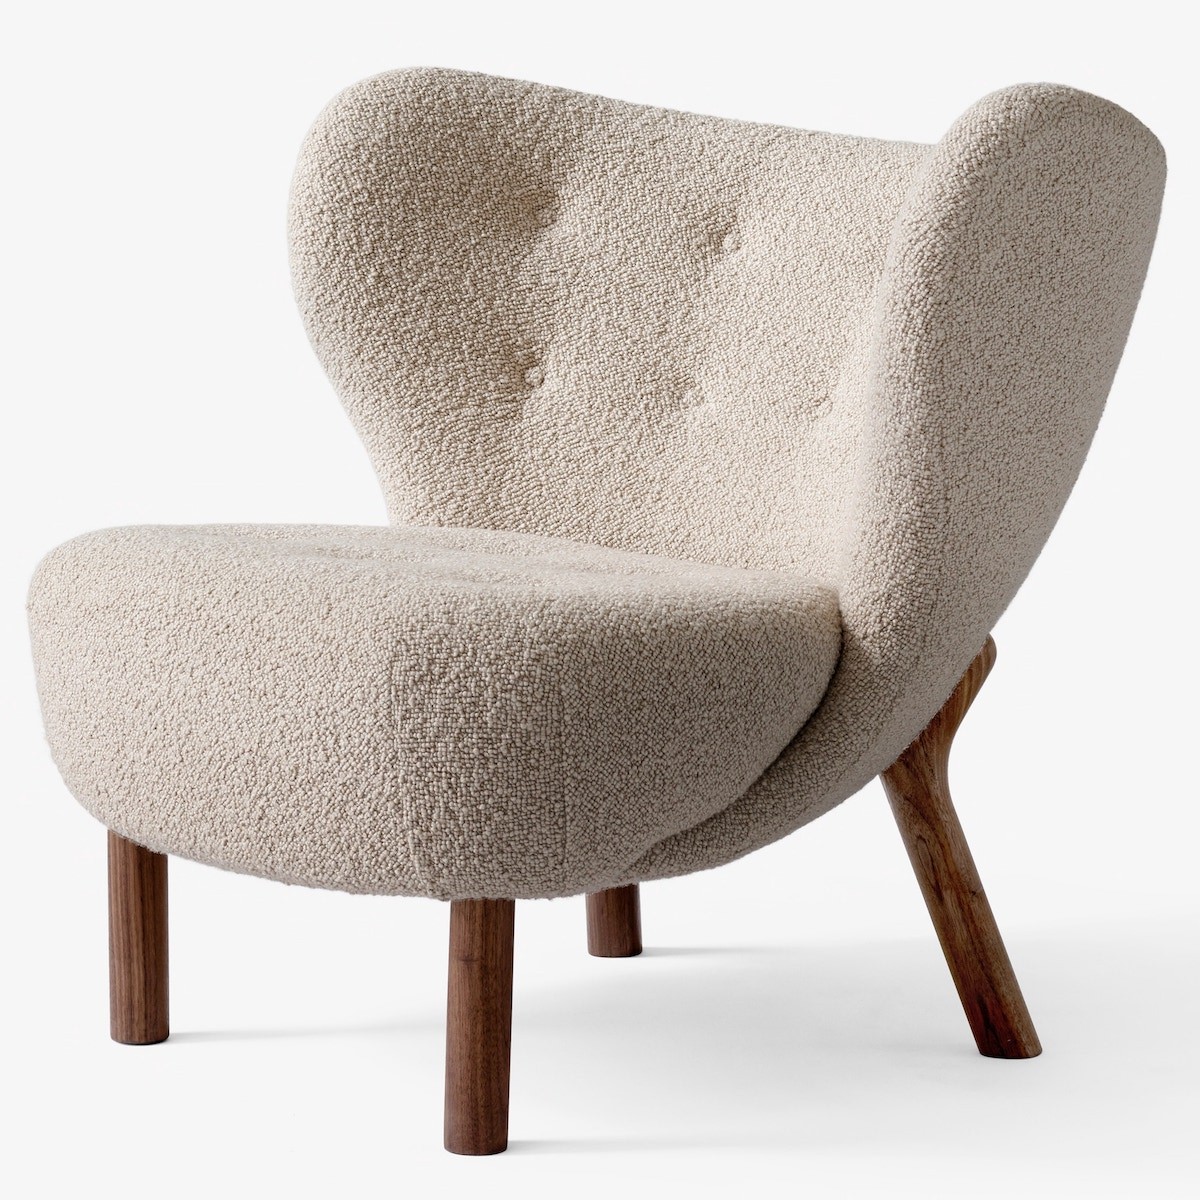 Little Petra lounge chair VB1 – Karakorum 003 + oiled Walnut